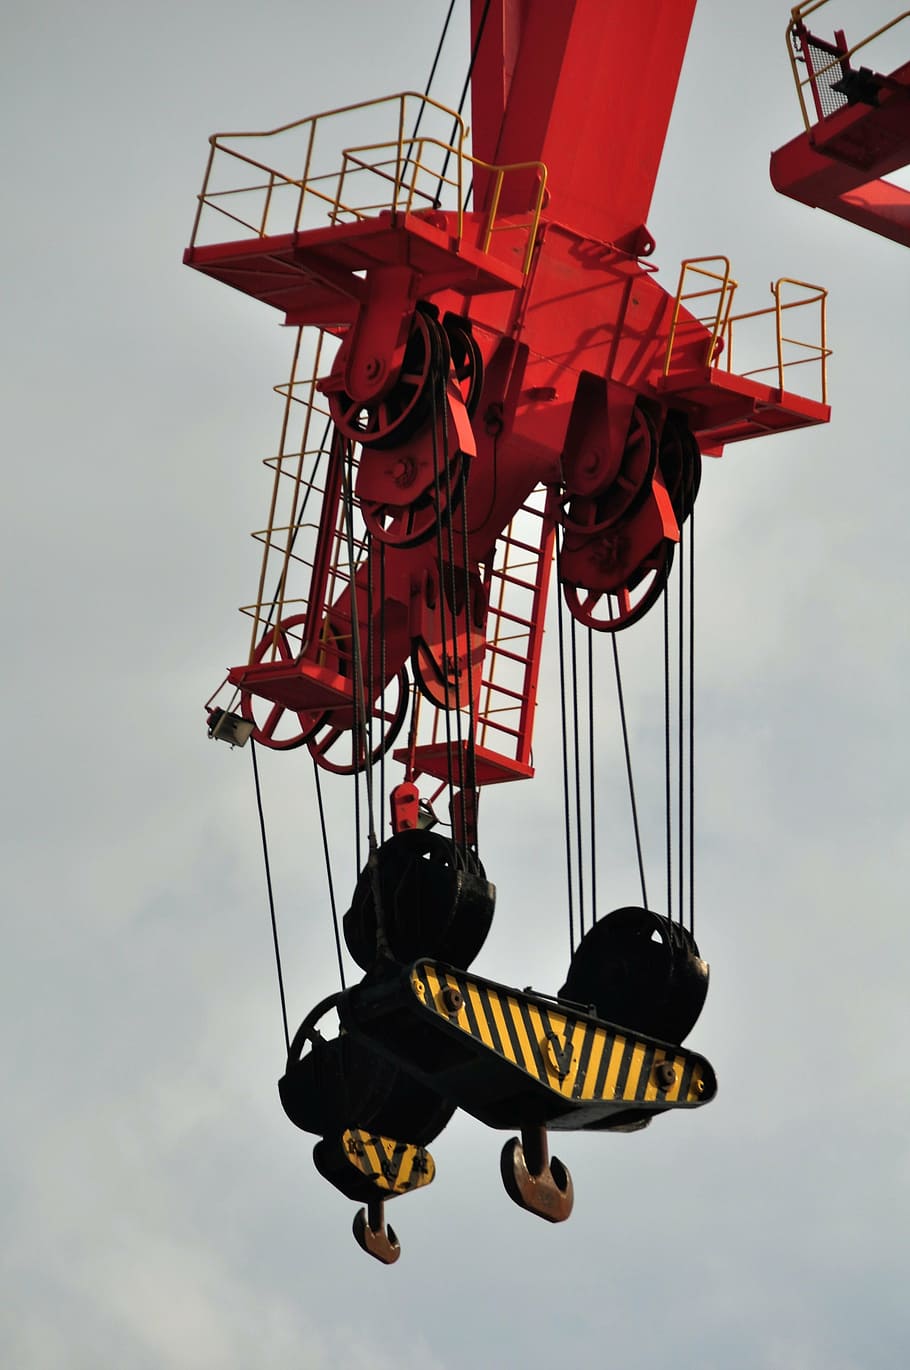 crane, loads, last, lift loads, baukran, crane arm, sky, load crane, cranes, hoist rope